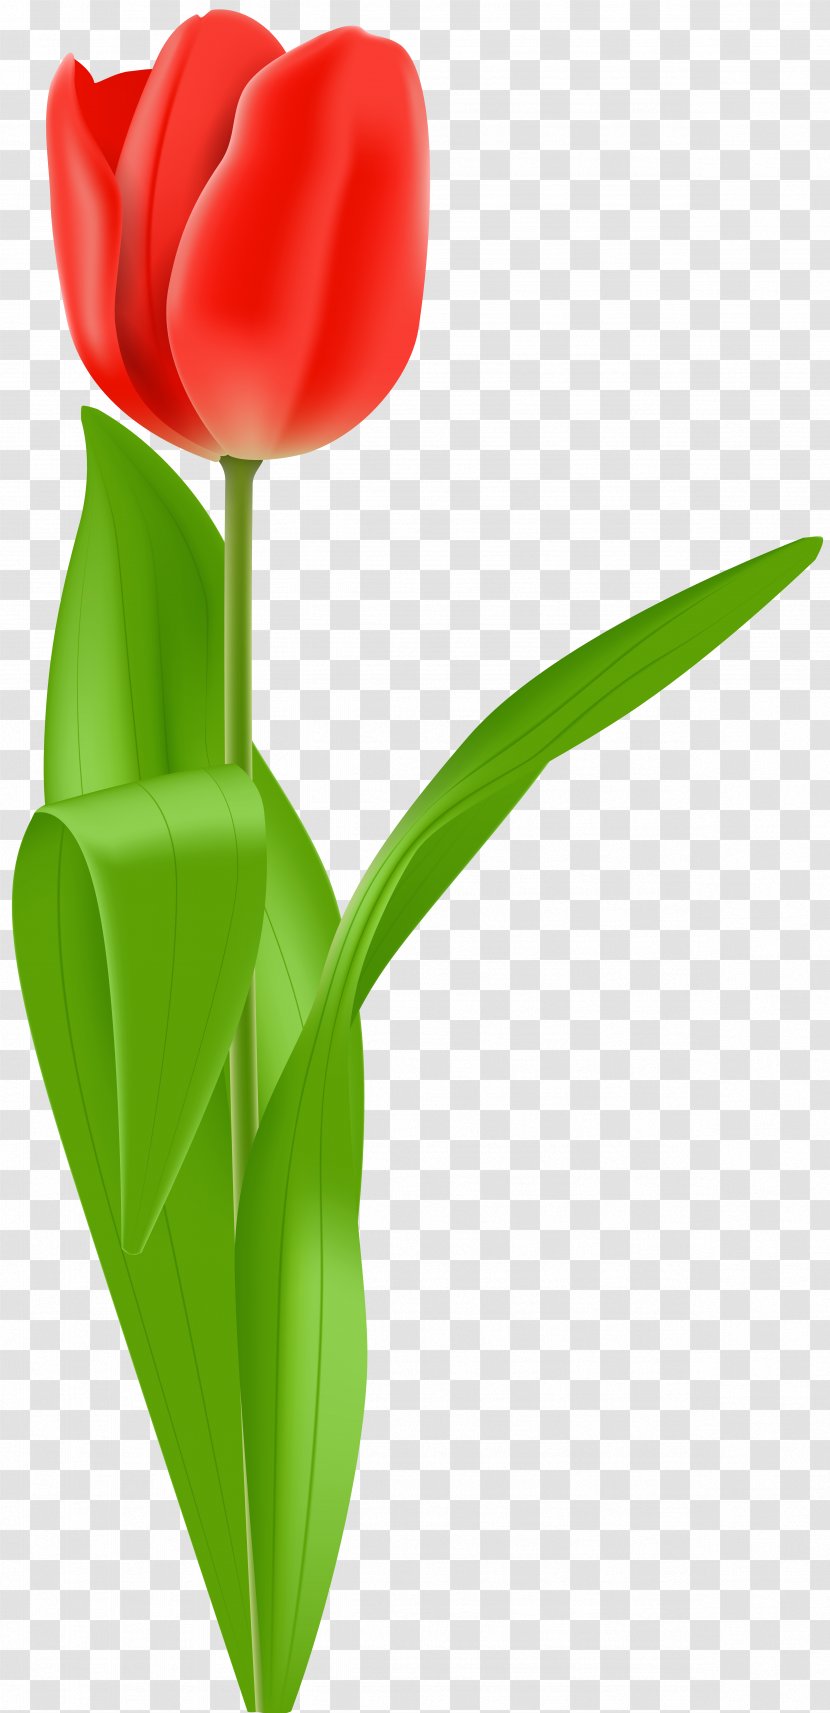 Tulip Flower Clip Art - Tulips Transparent PNG